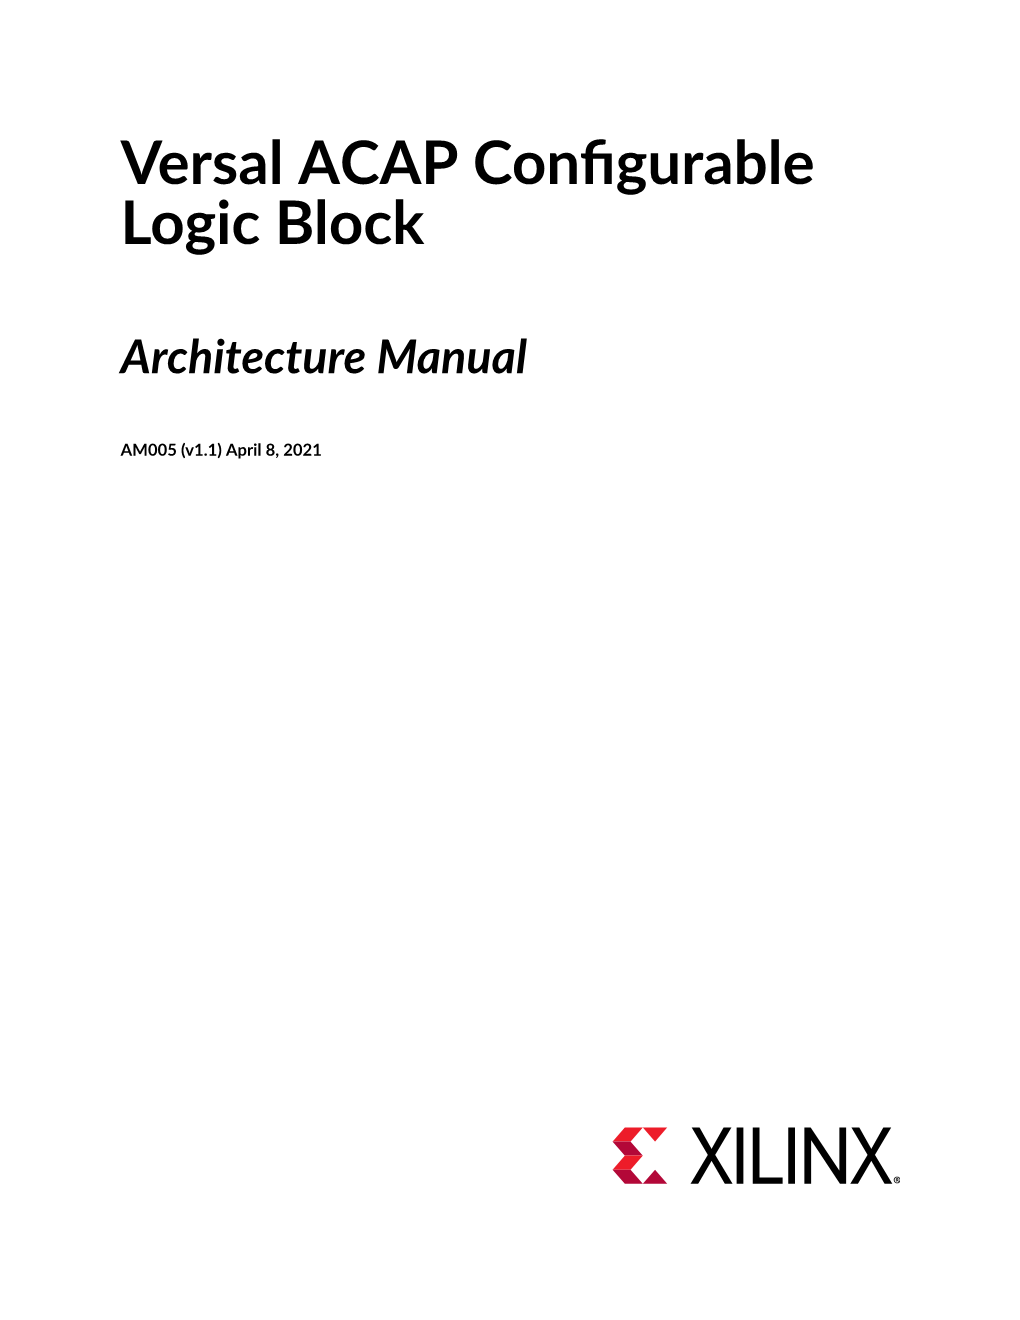 Versal ACAP Configurable Logic Block Architecture Manual